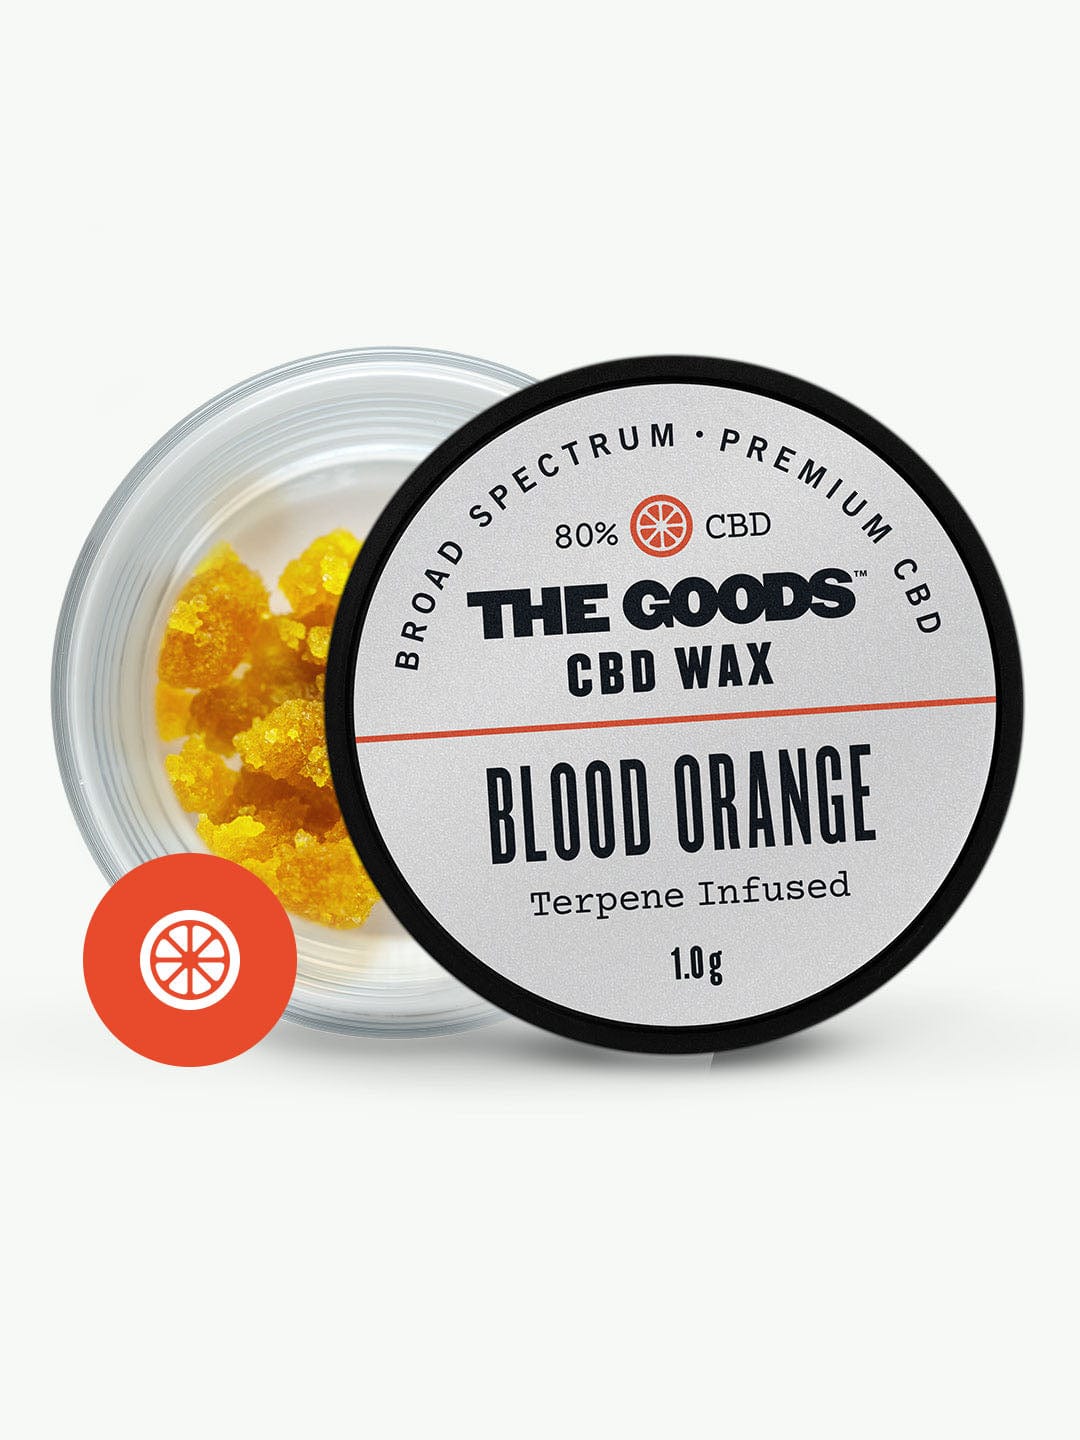 The Goods CBD Wax Blood Orange